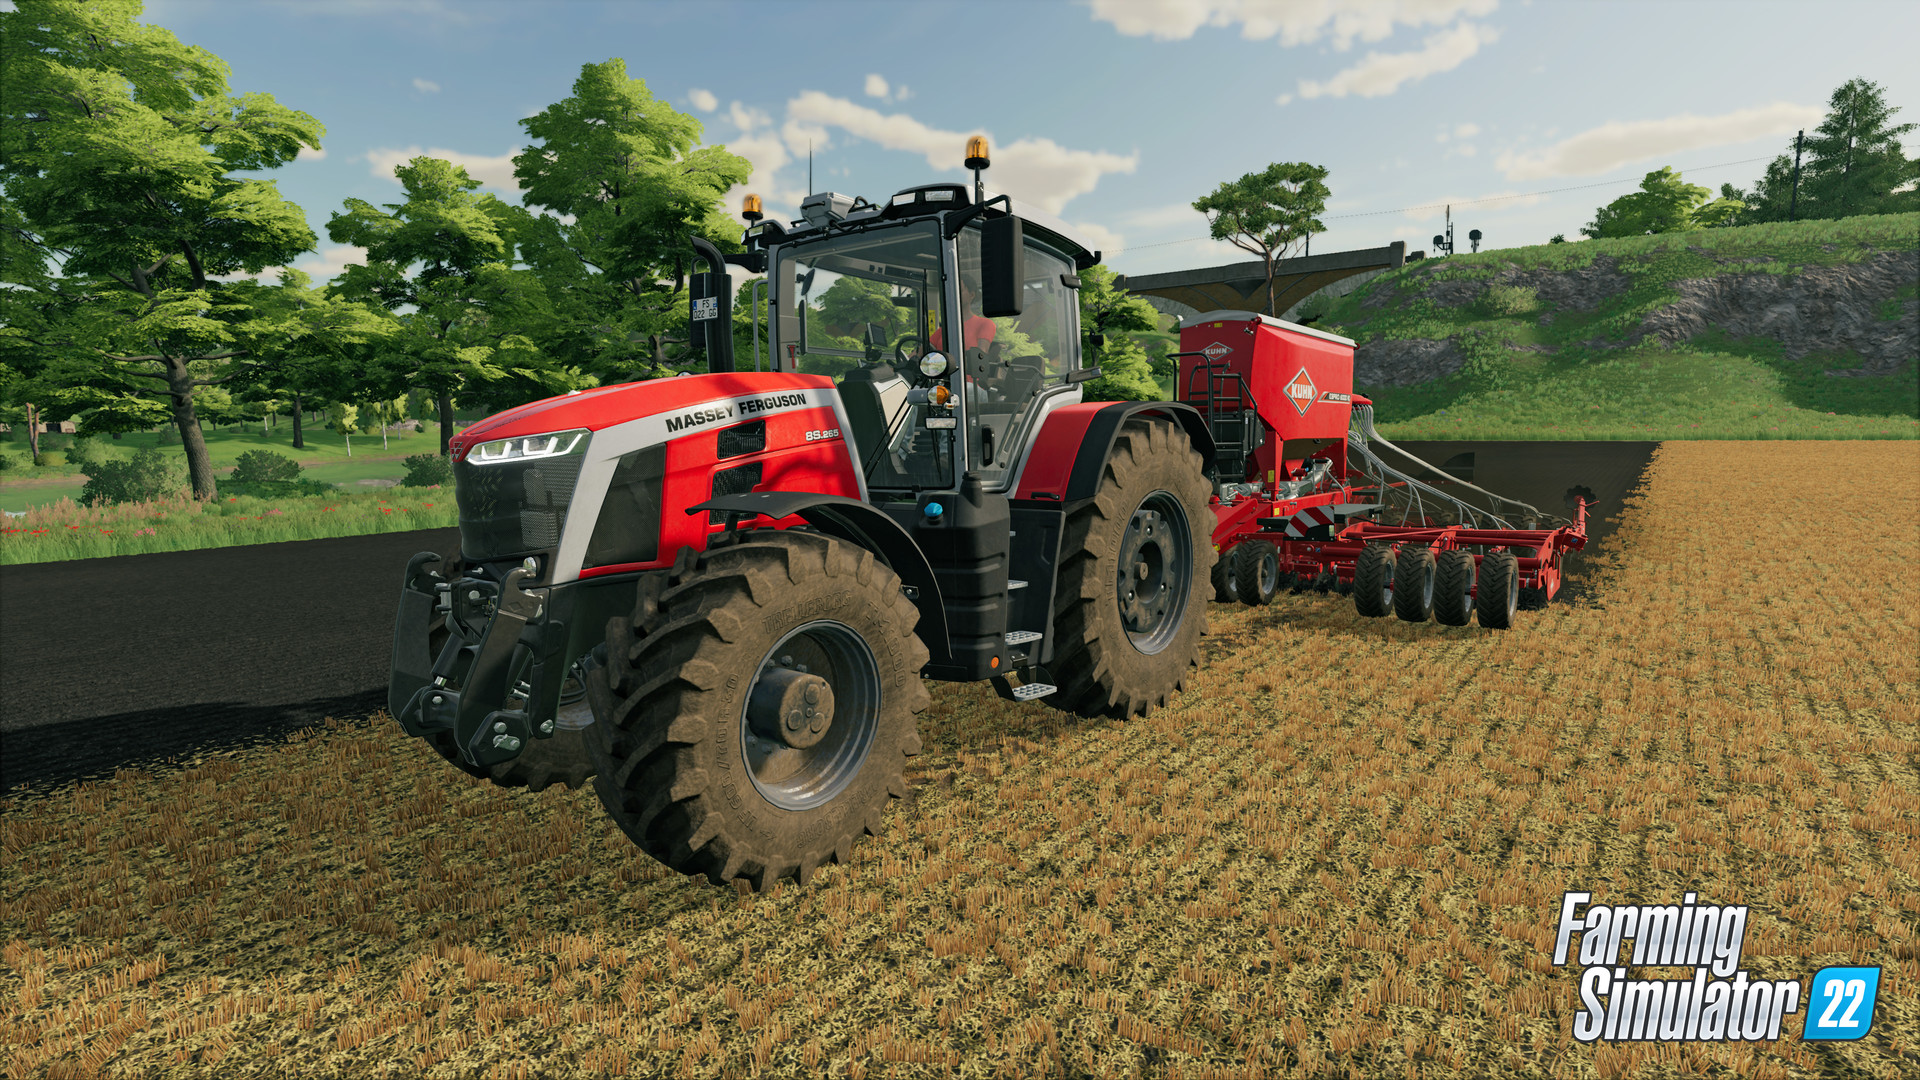 Farming Simulator 22 - Year 1 Season Pass DLC EU V2 Steam Altergift